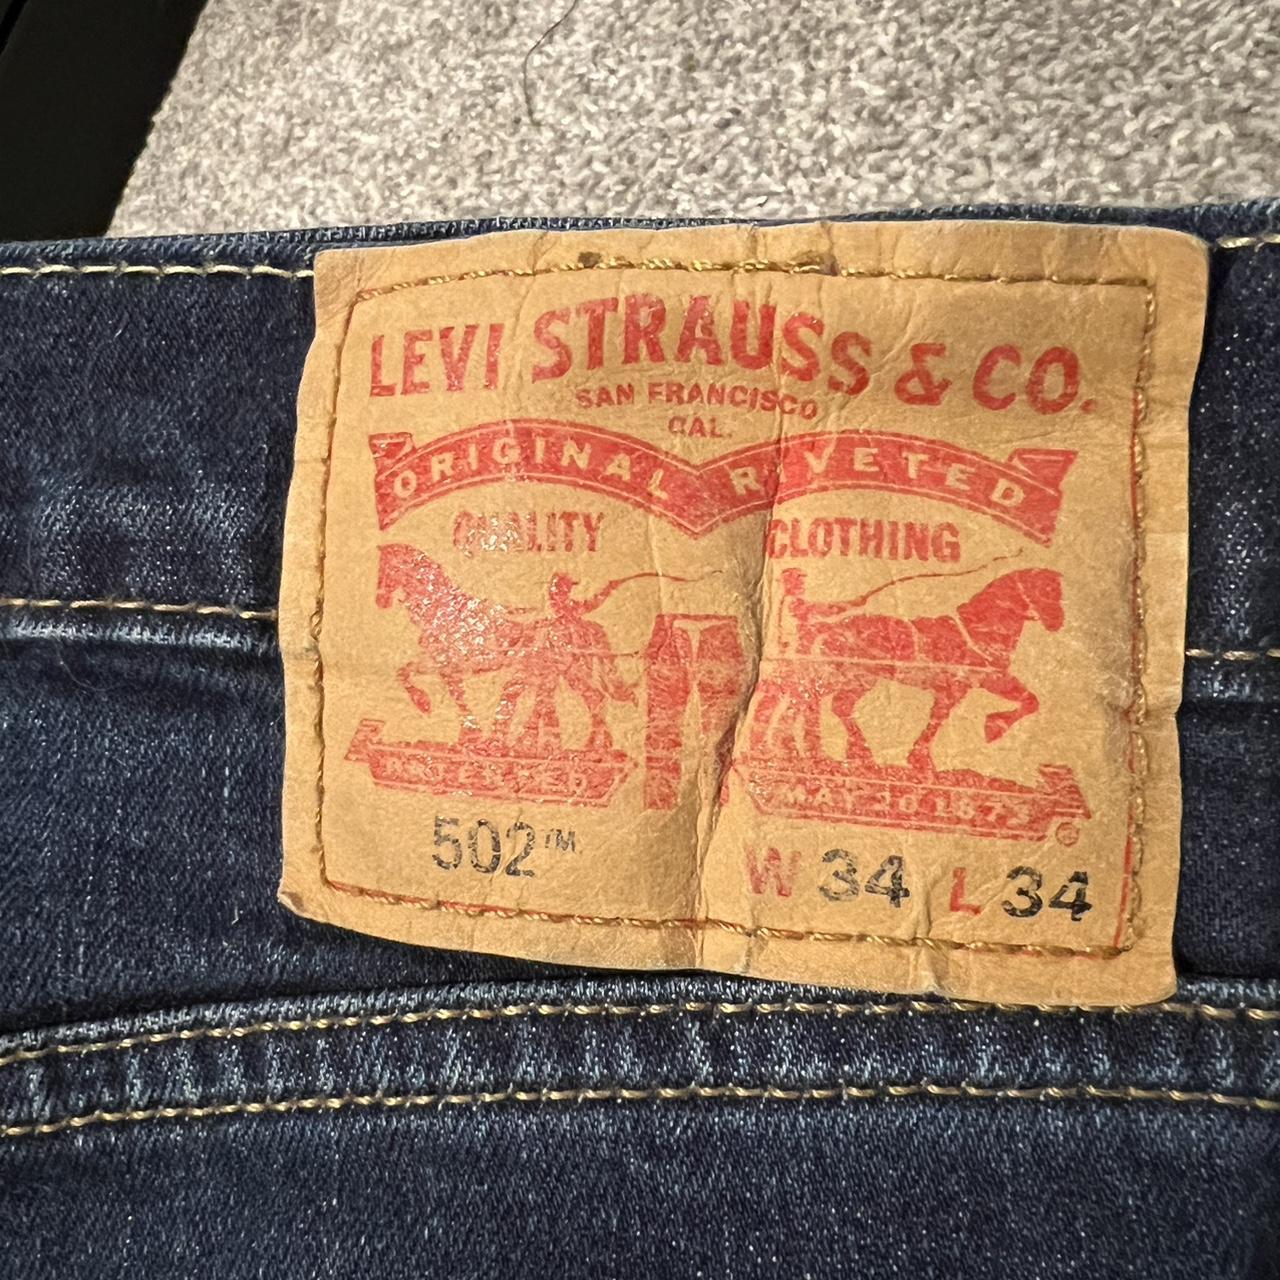 Levi’s 502 blue denim jeans Good condition - slight... - Depop